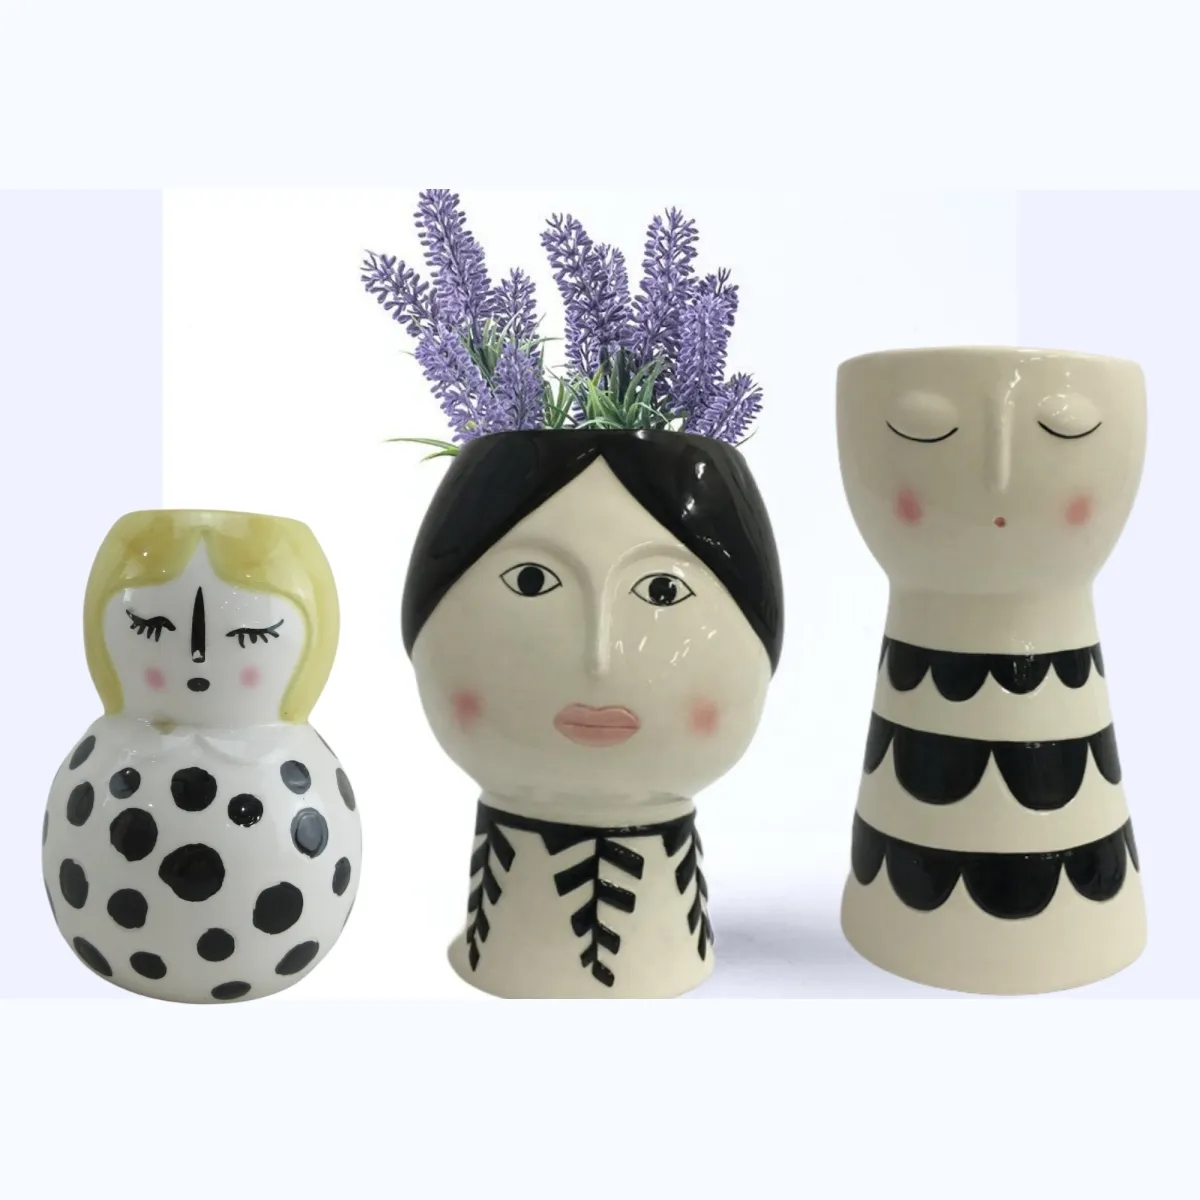 Vaso in ceramica dipinto a faccia in ceramica creativa in stile nordico moderno vasi in ceramica per piante fioriere per vasi da fiori